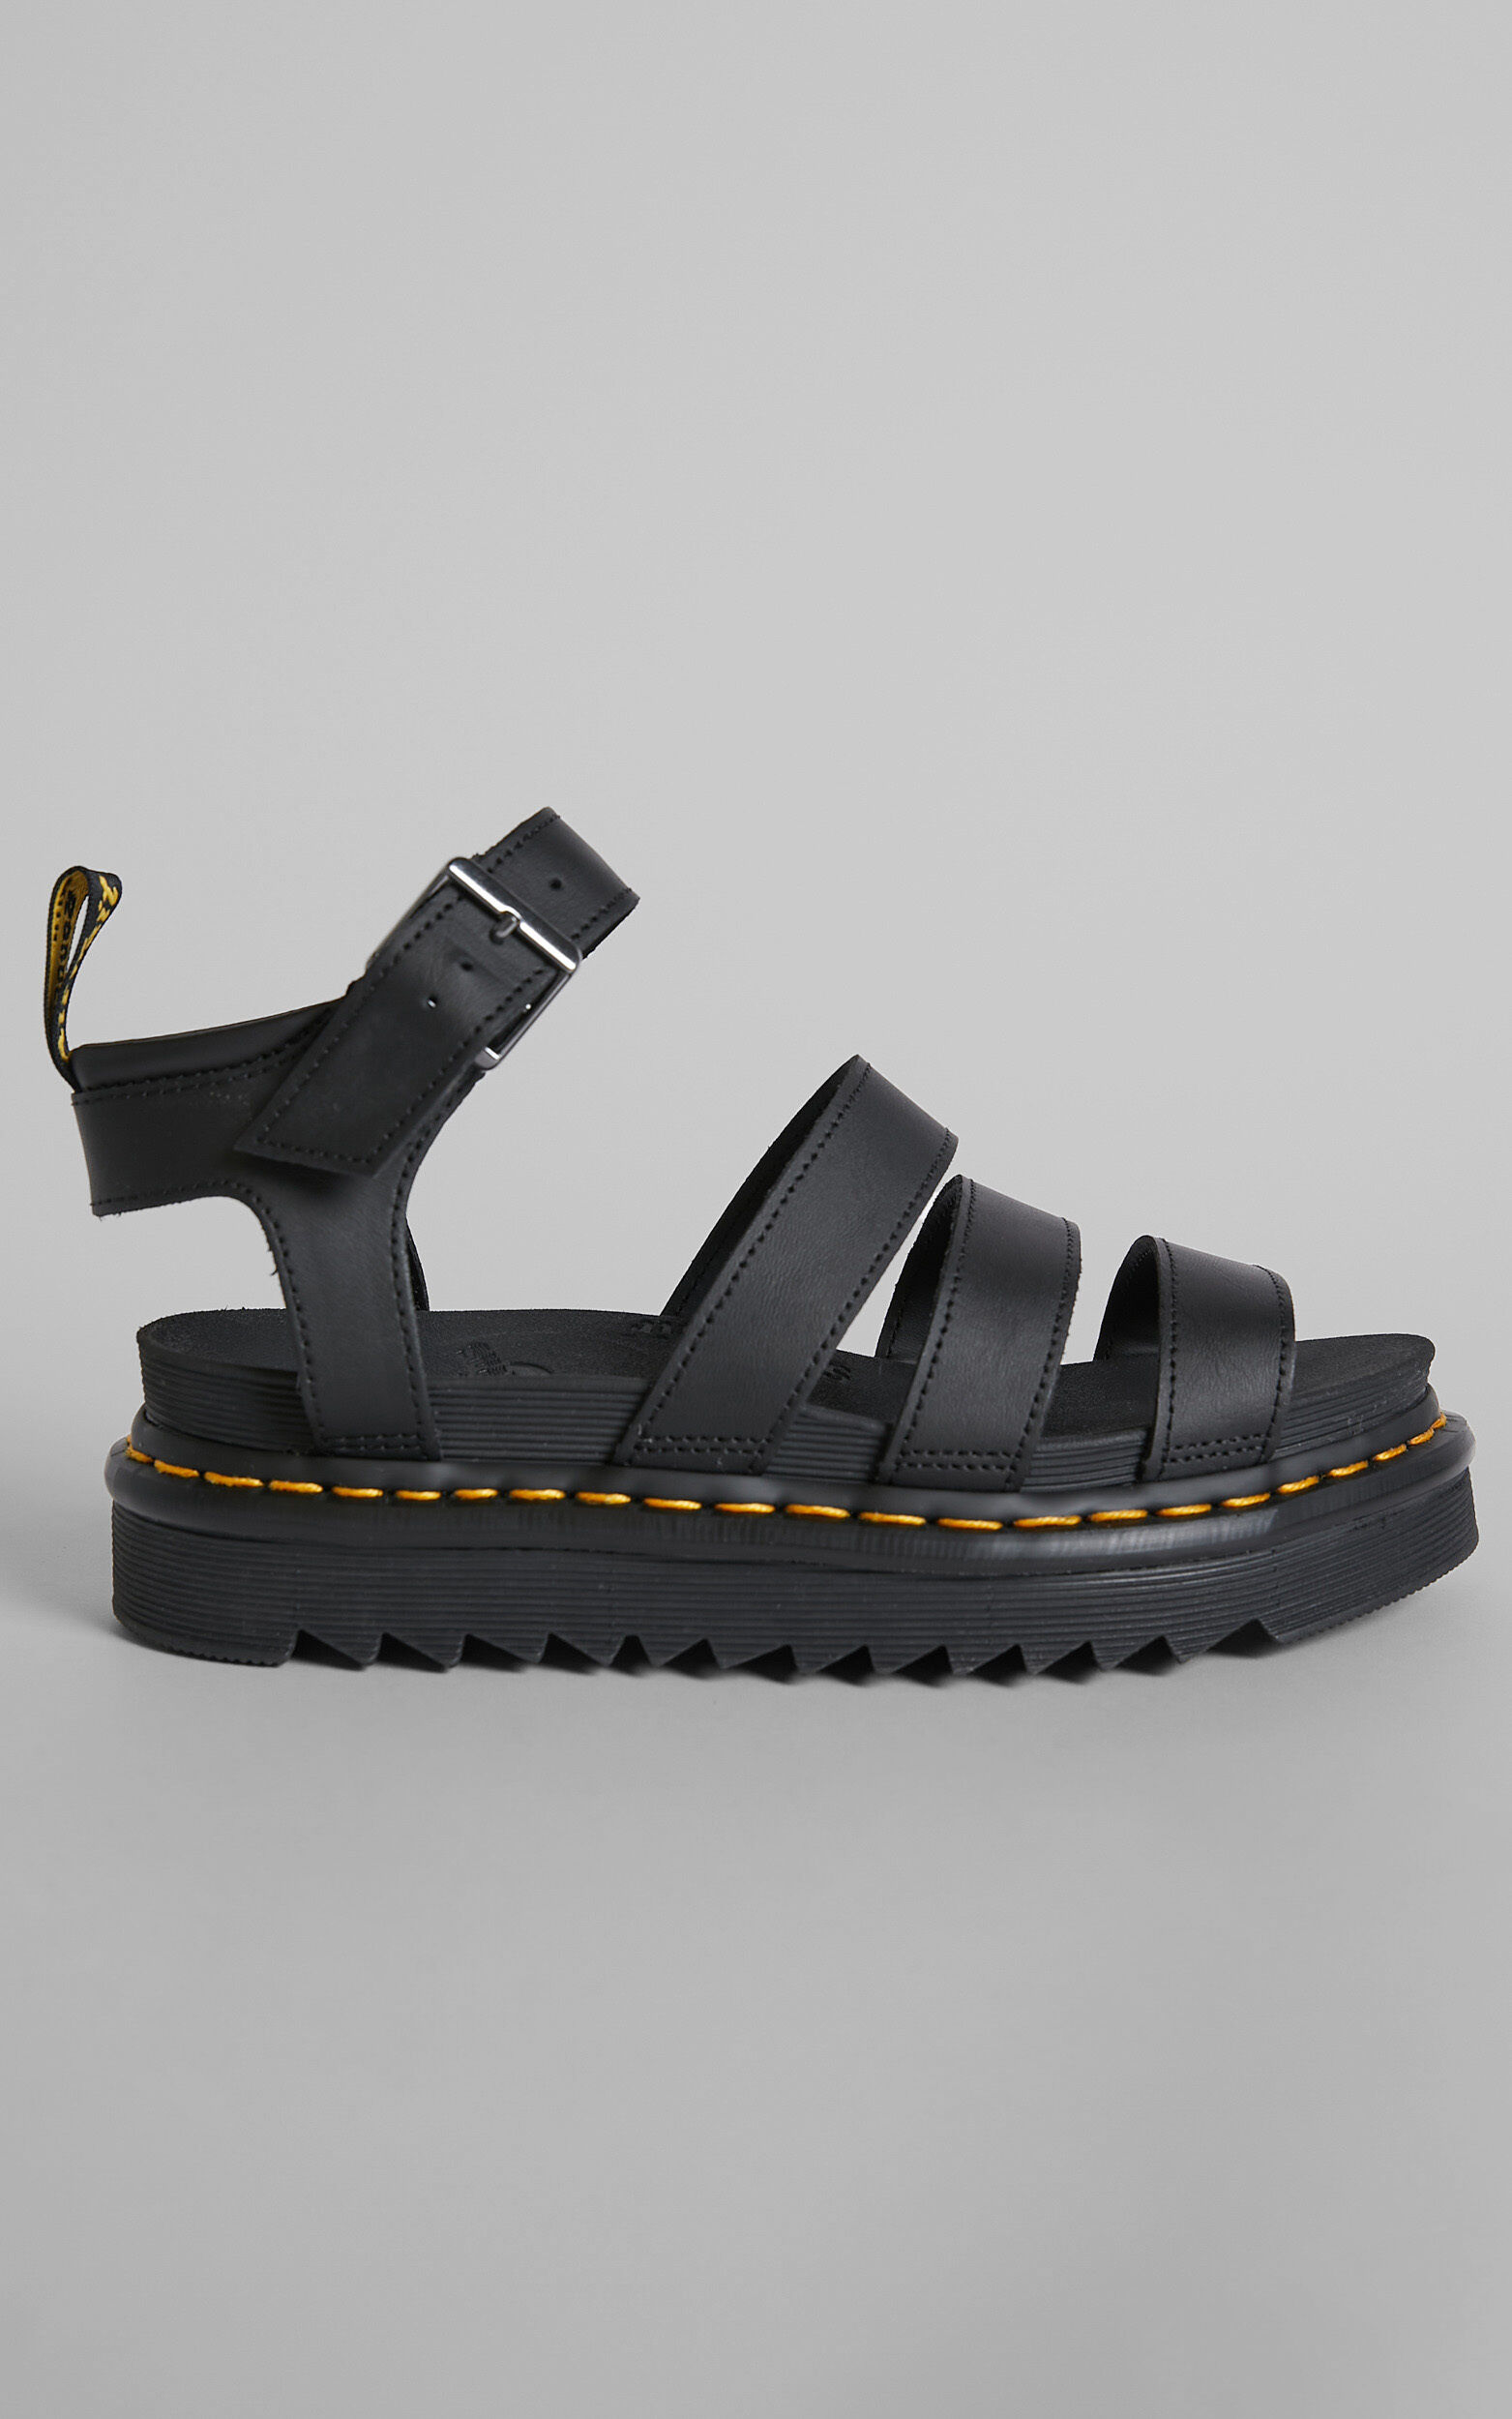 Dr. Martens - Blaire Hydro Sandals in Black - 06, BLK1